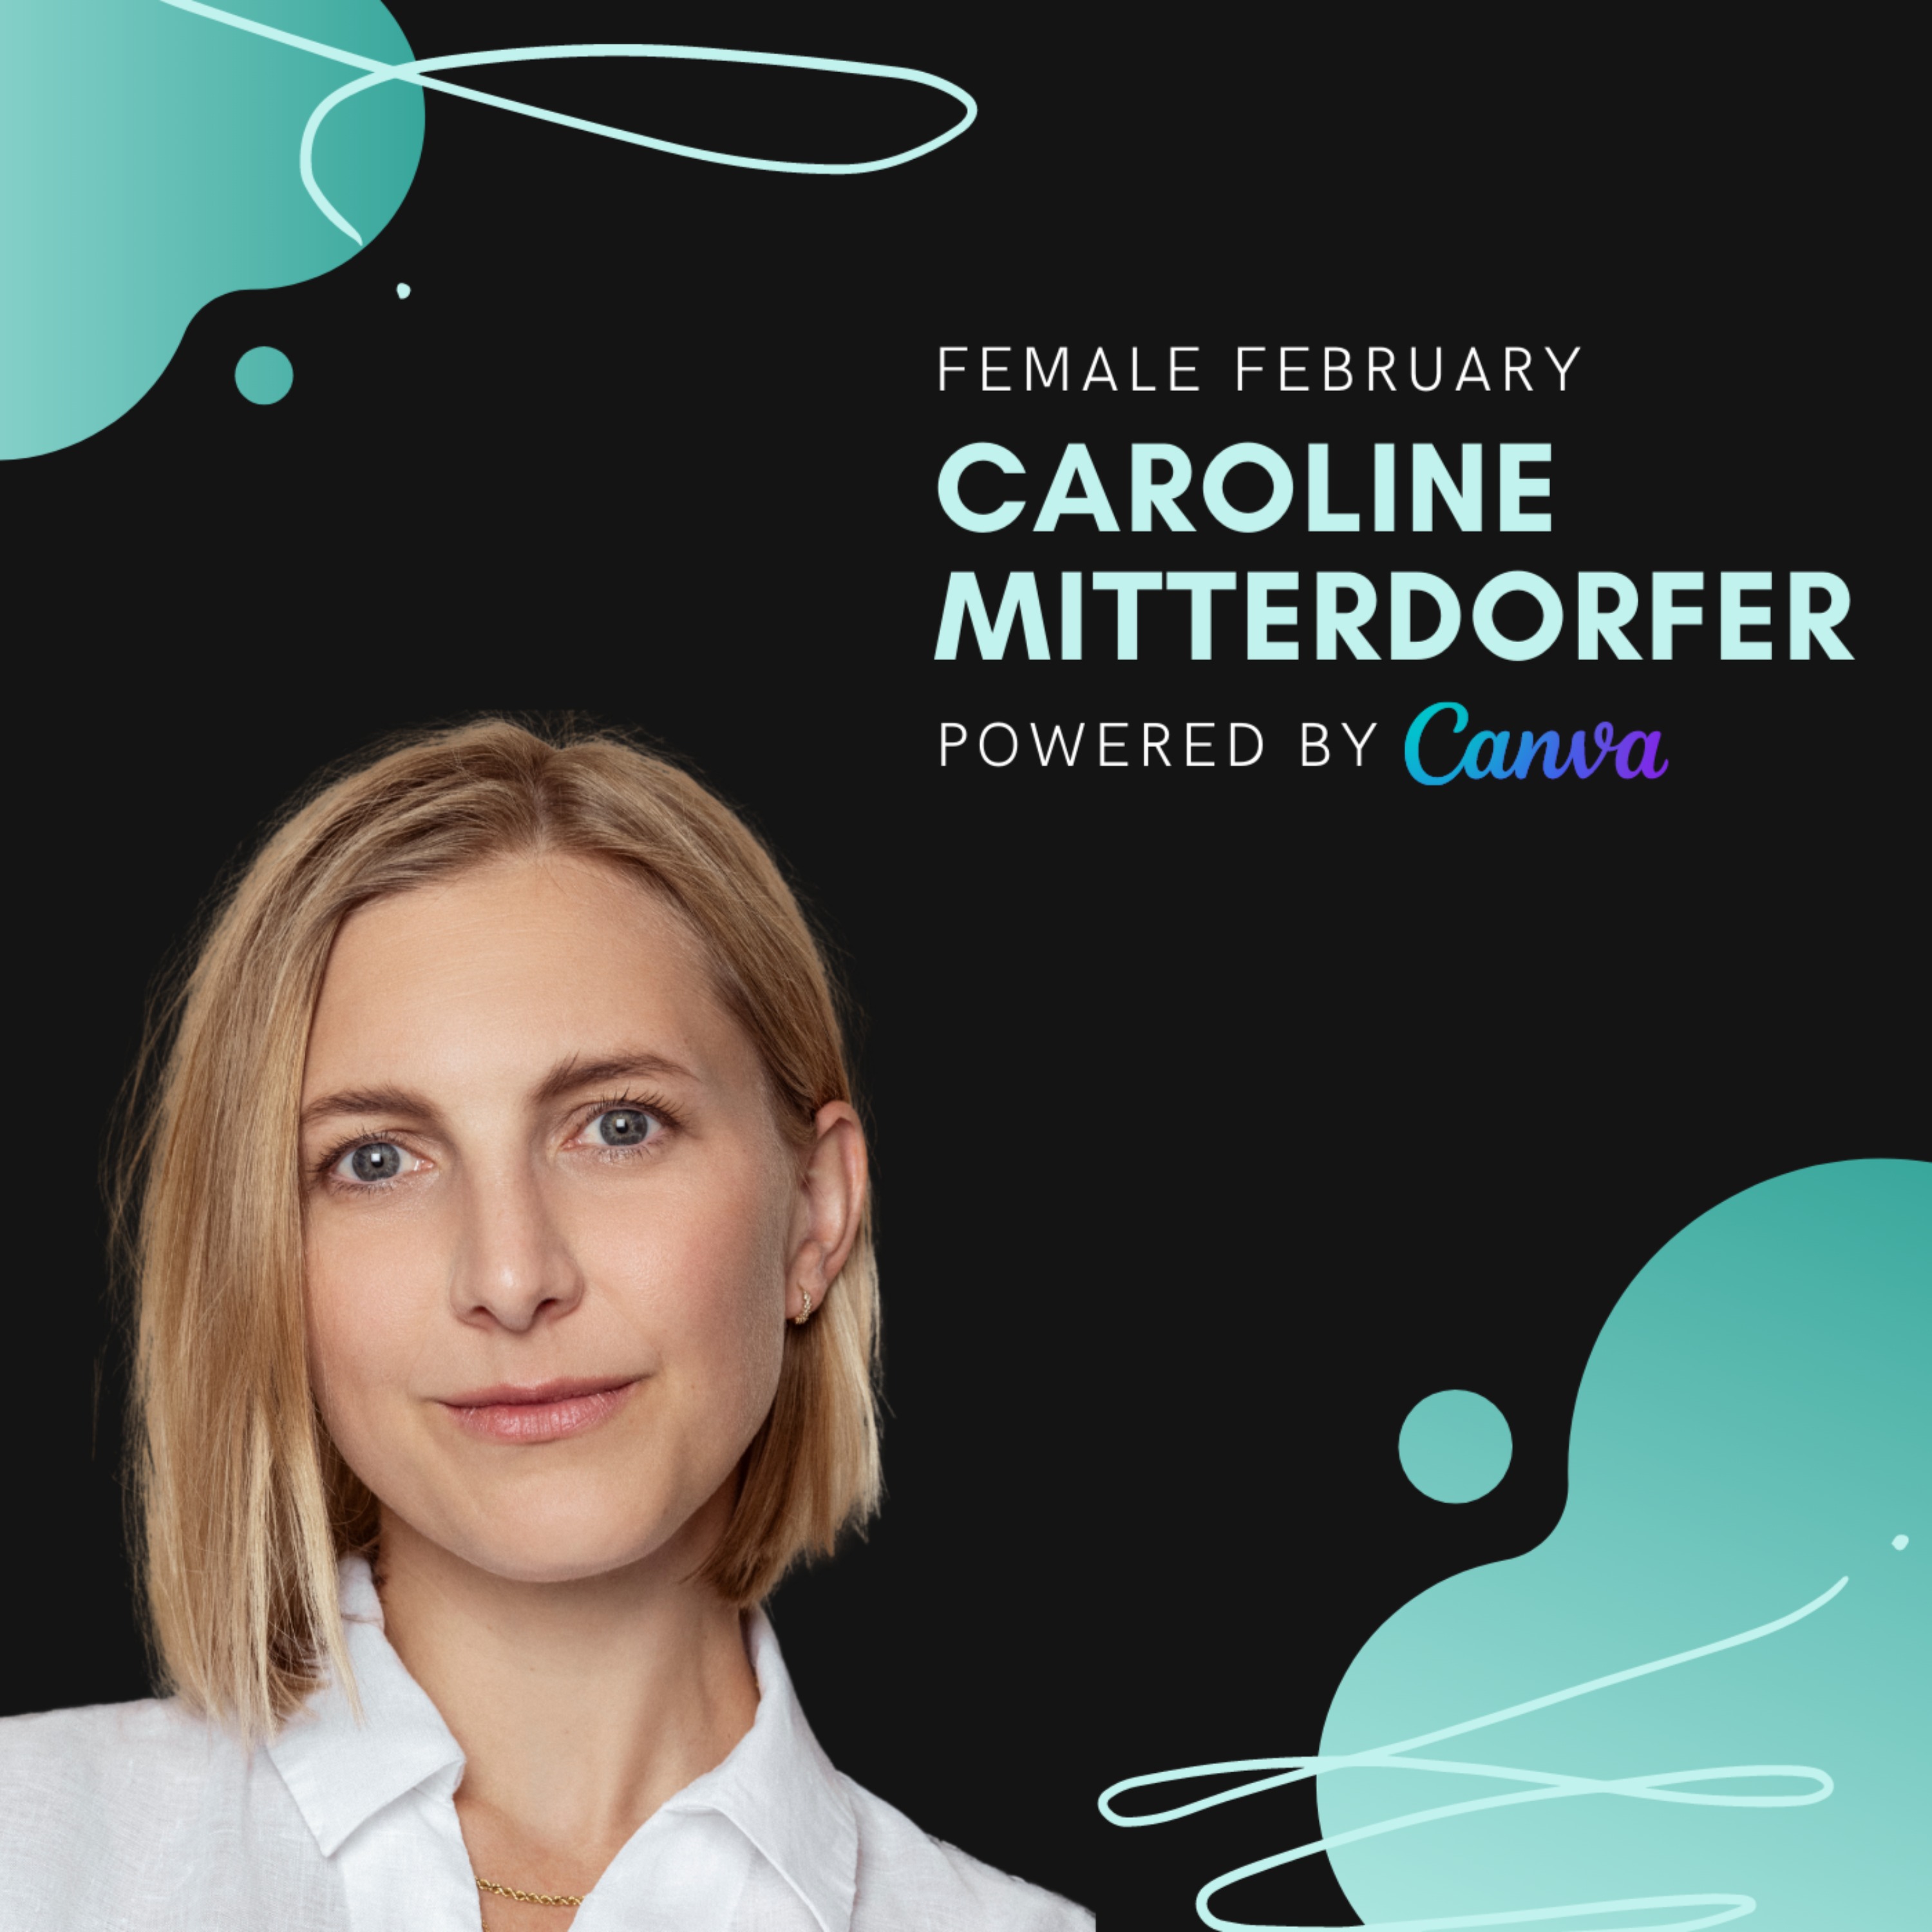 Caroline Mitterdorfer, LEVY Health | Female February Image